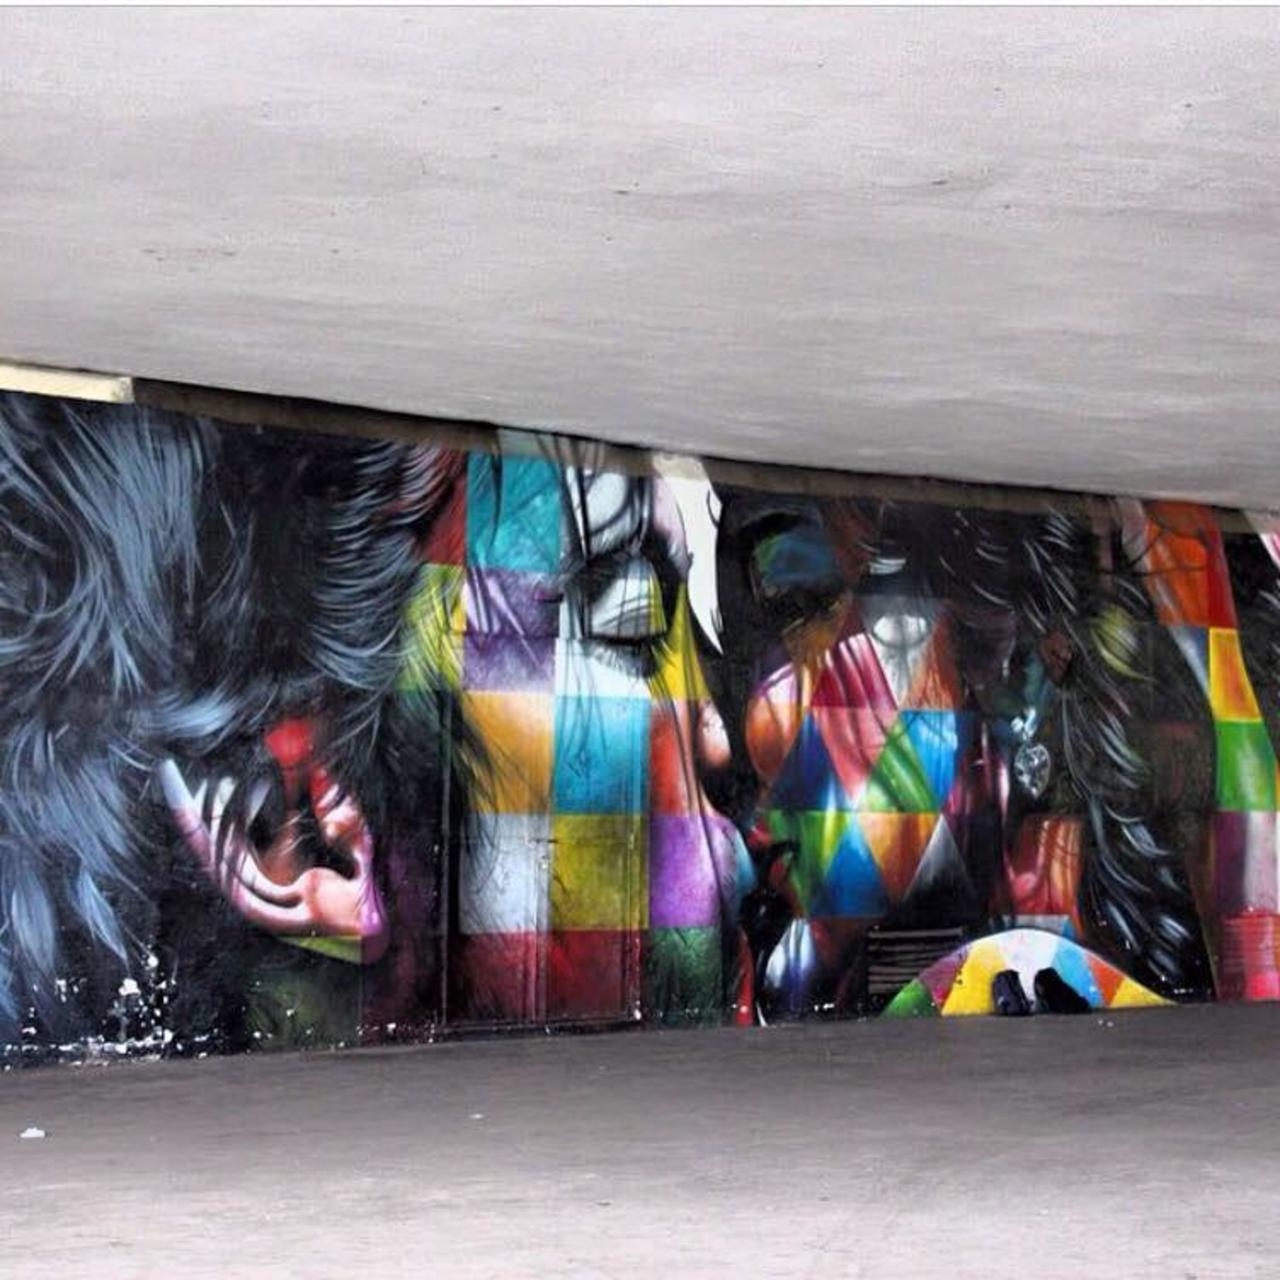 New Street Art by the brilliant Eduardo Kobra 

#art #mural #graffiti #streetart http://t.co/iR3pf53UdF